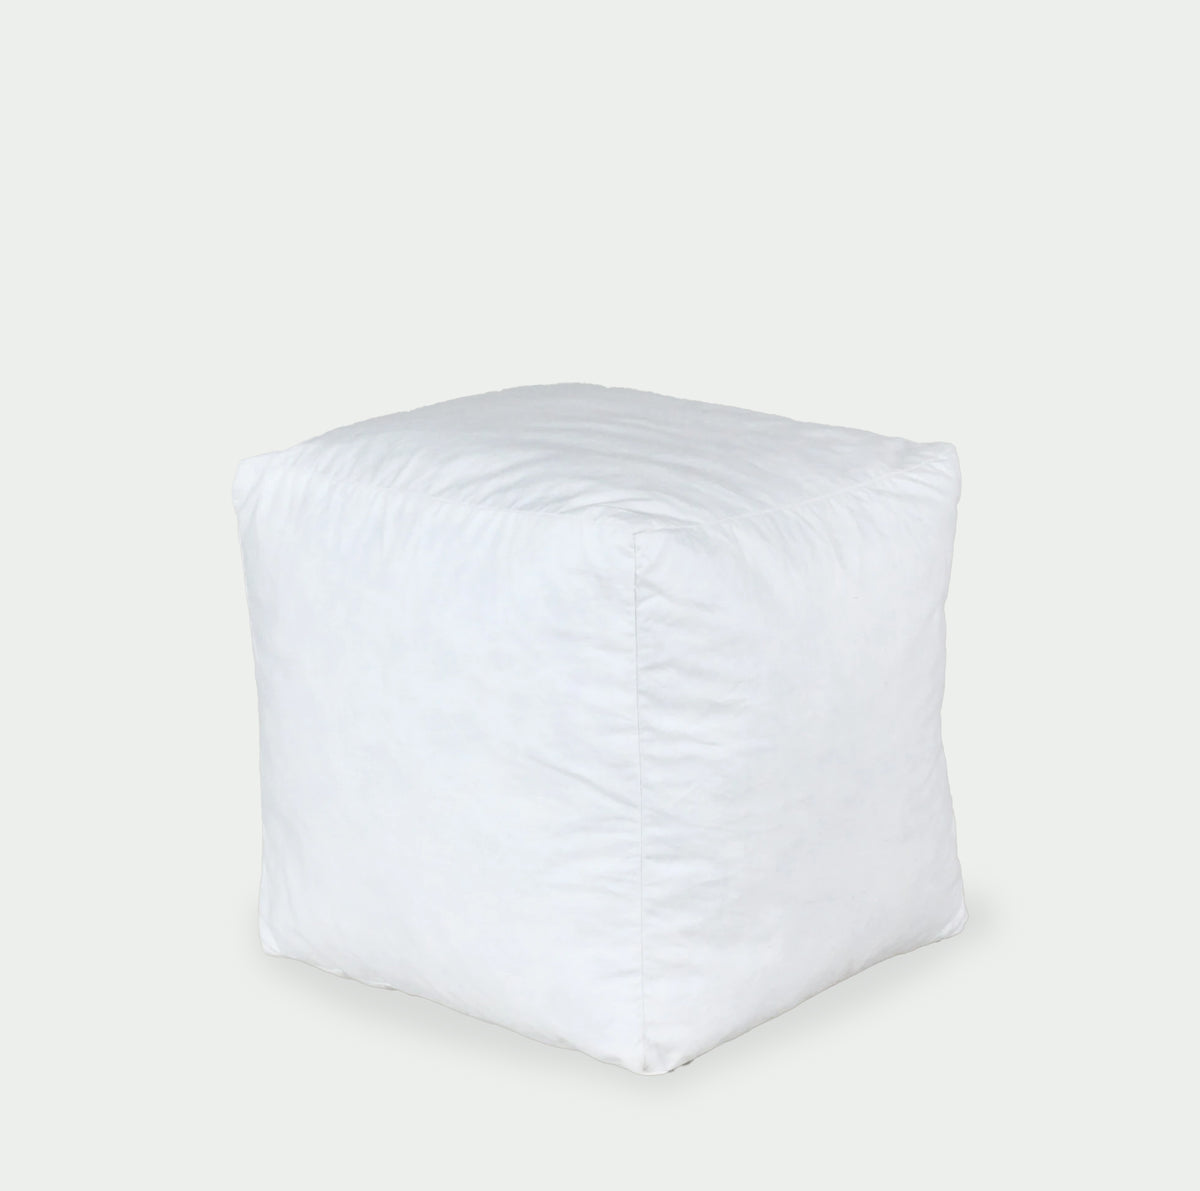 30 x 30 50/50 Down Feather Pillow Form - PillowCubes